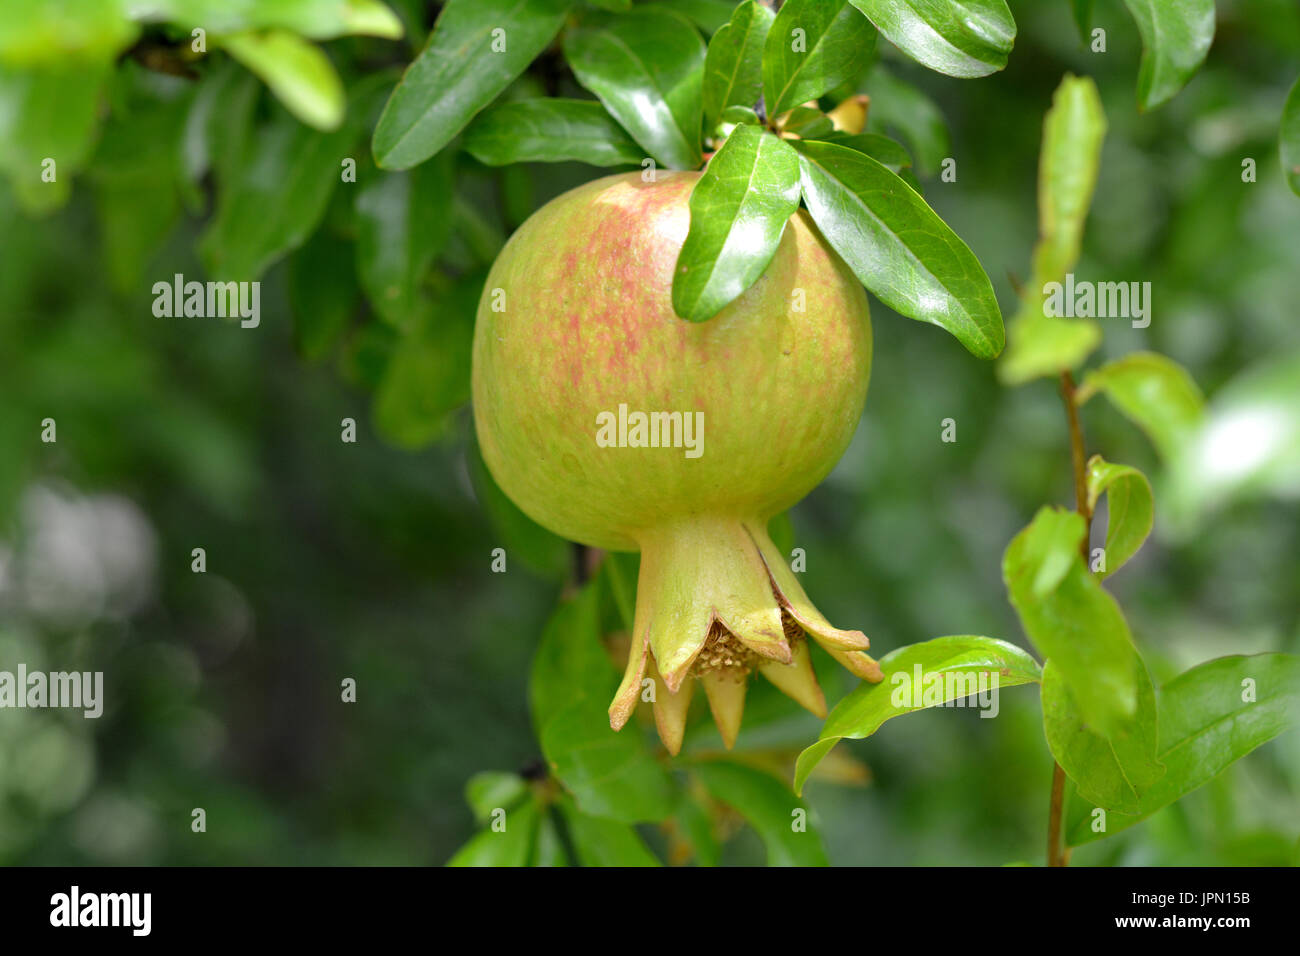 Green pomegranate with tree wallpaper Stock Photo - Alamy